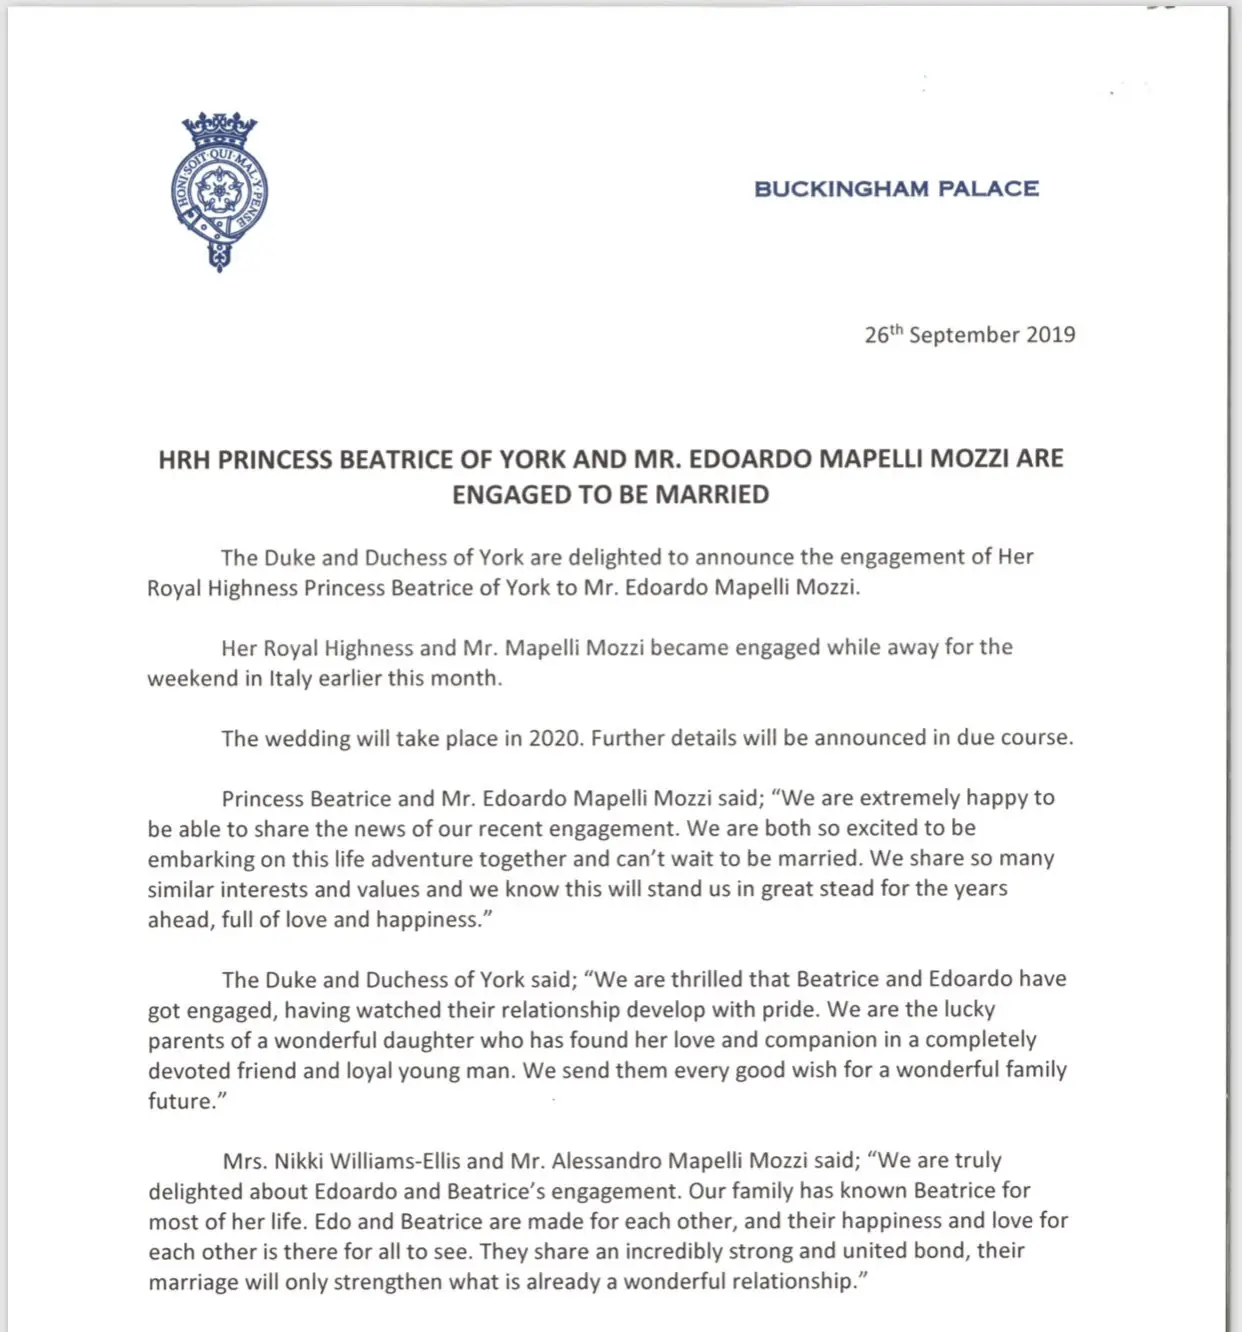 Duke and Duchess of York announced the engagement